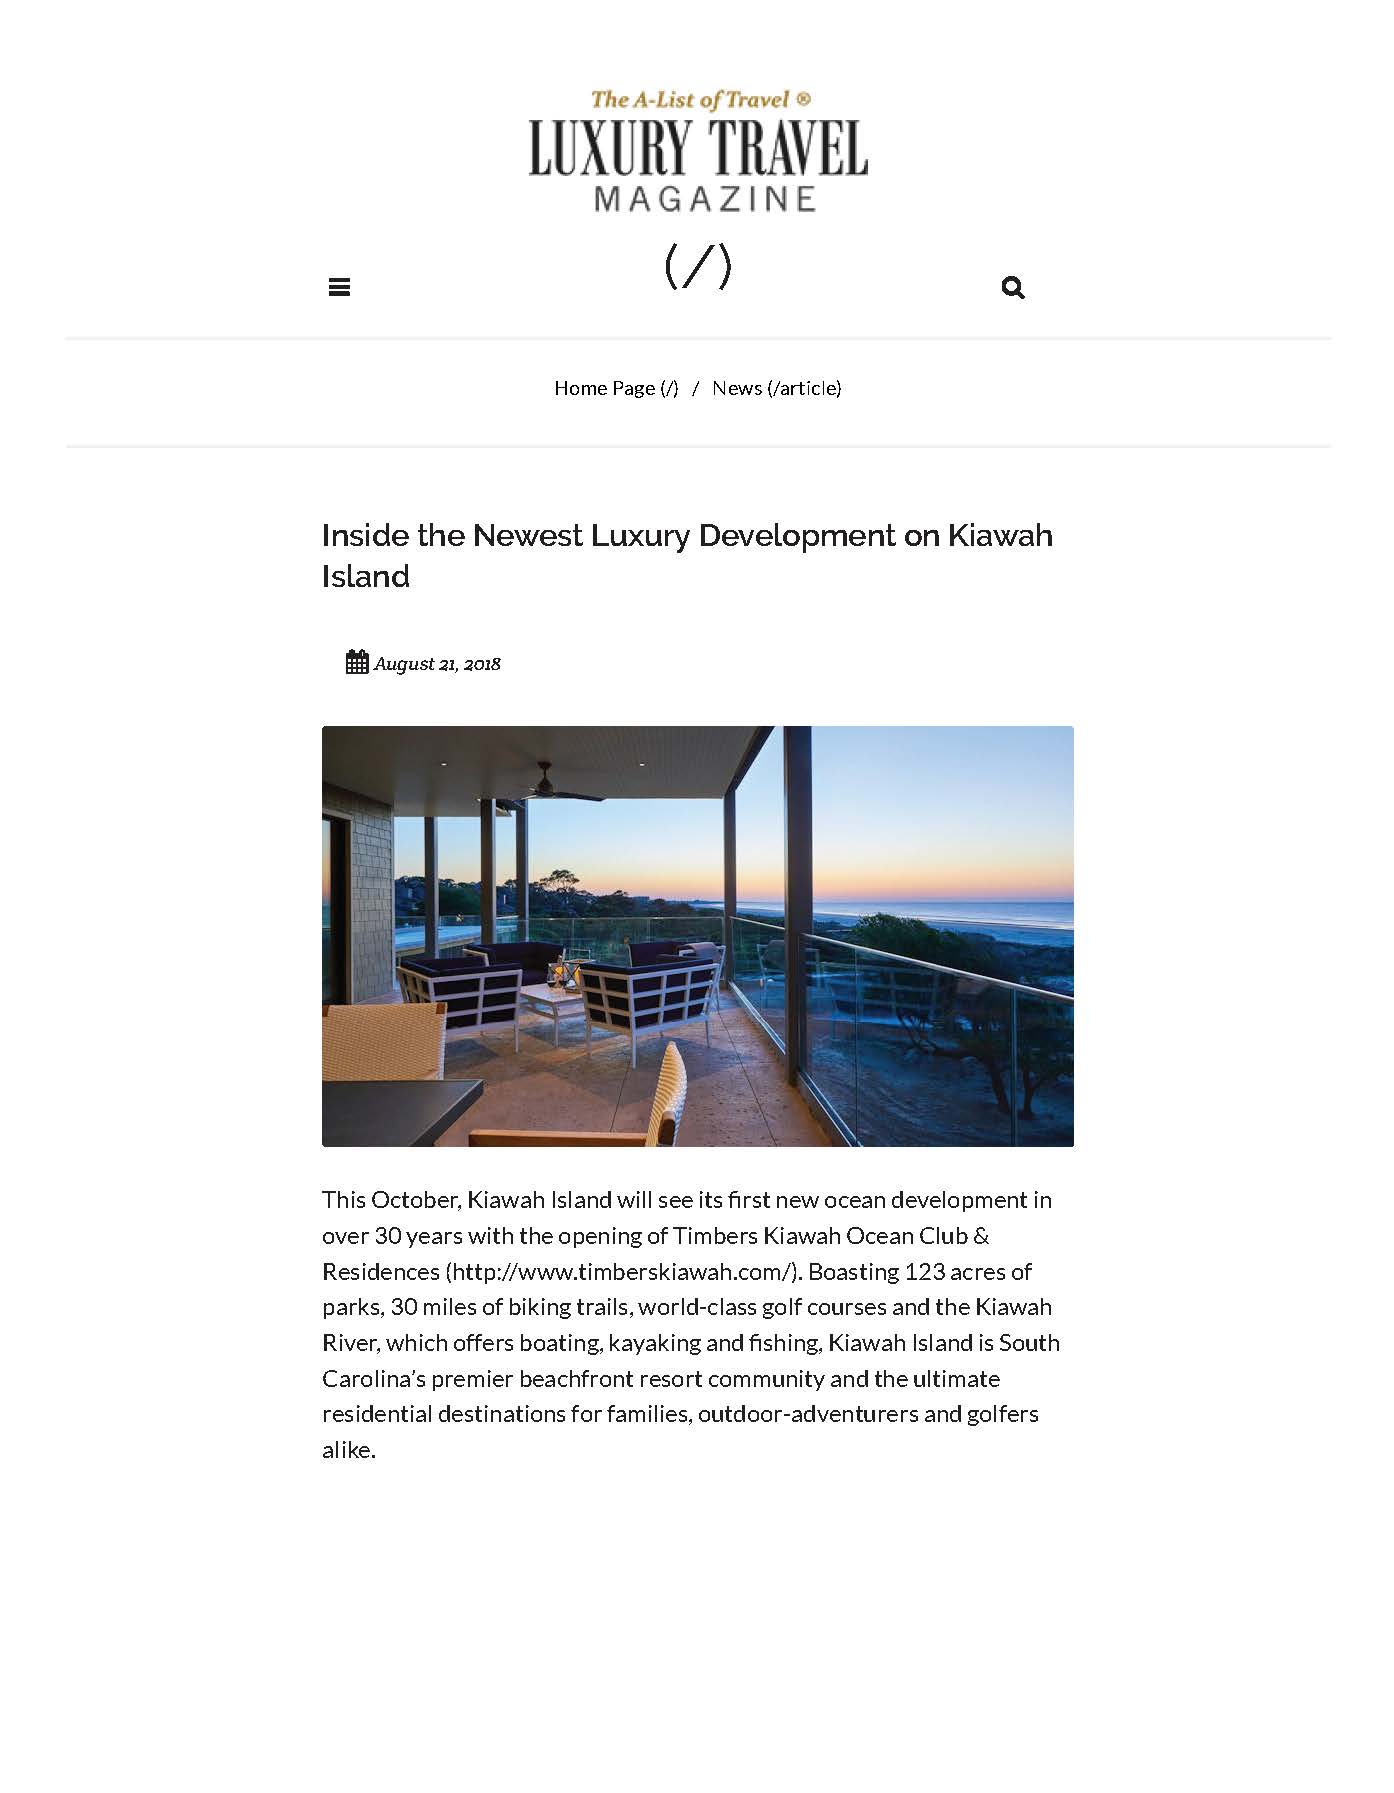 Inside the Newest Luxury Development on Kiawah Island by J Banks Design in Luxury Travel Magazine